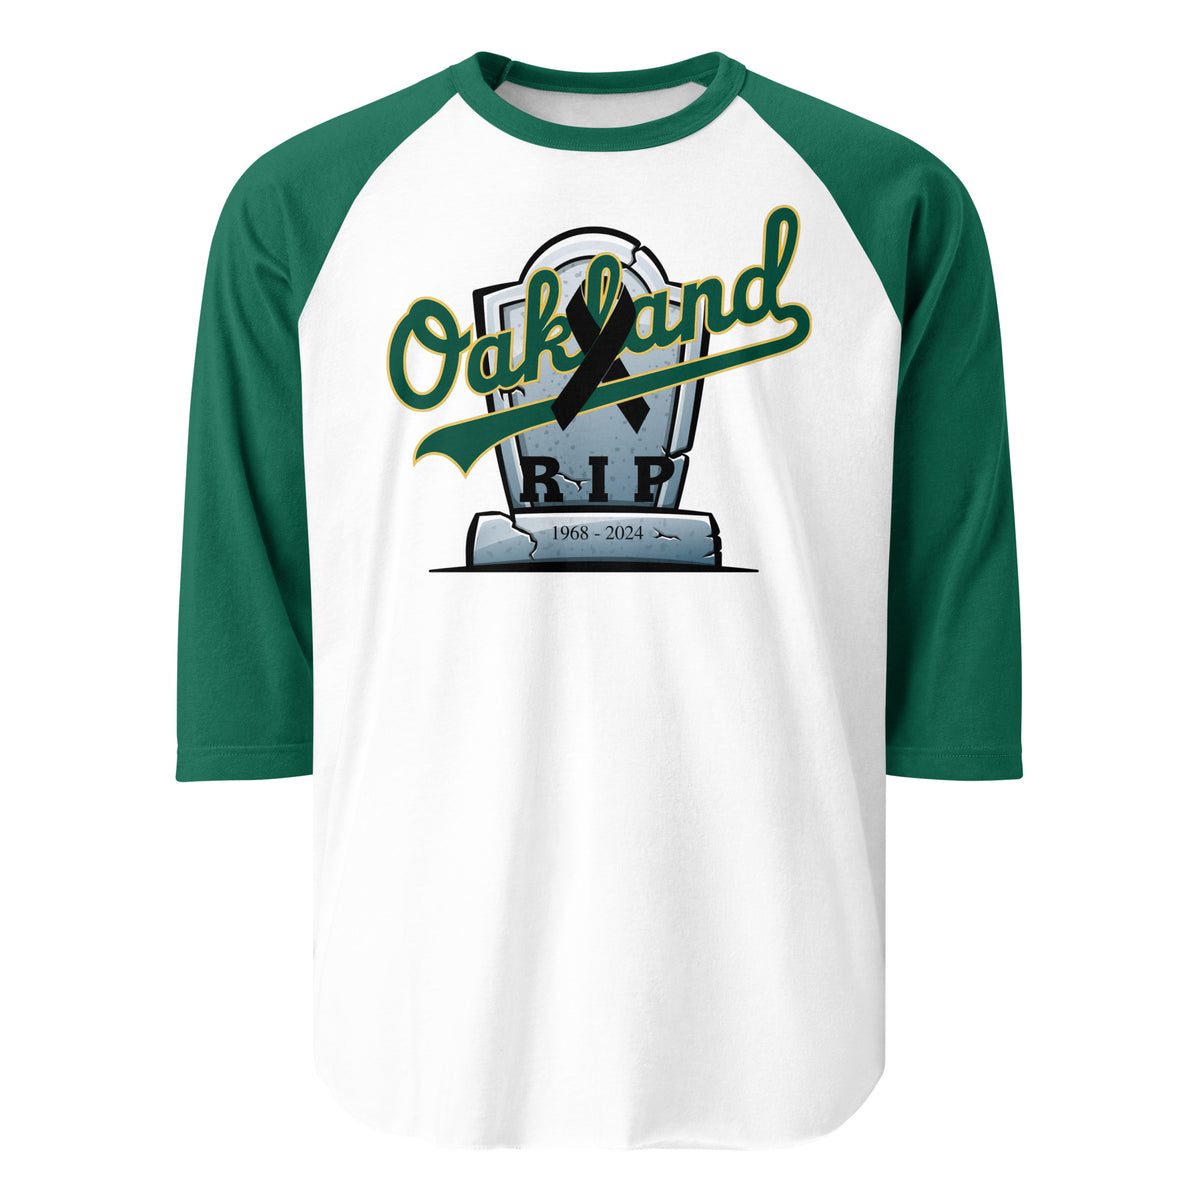 RIP Oakland 3/4 sleeve raglan shirt